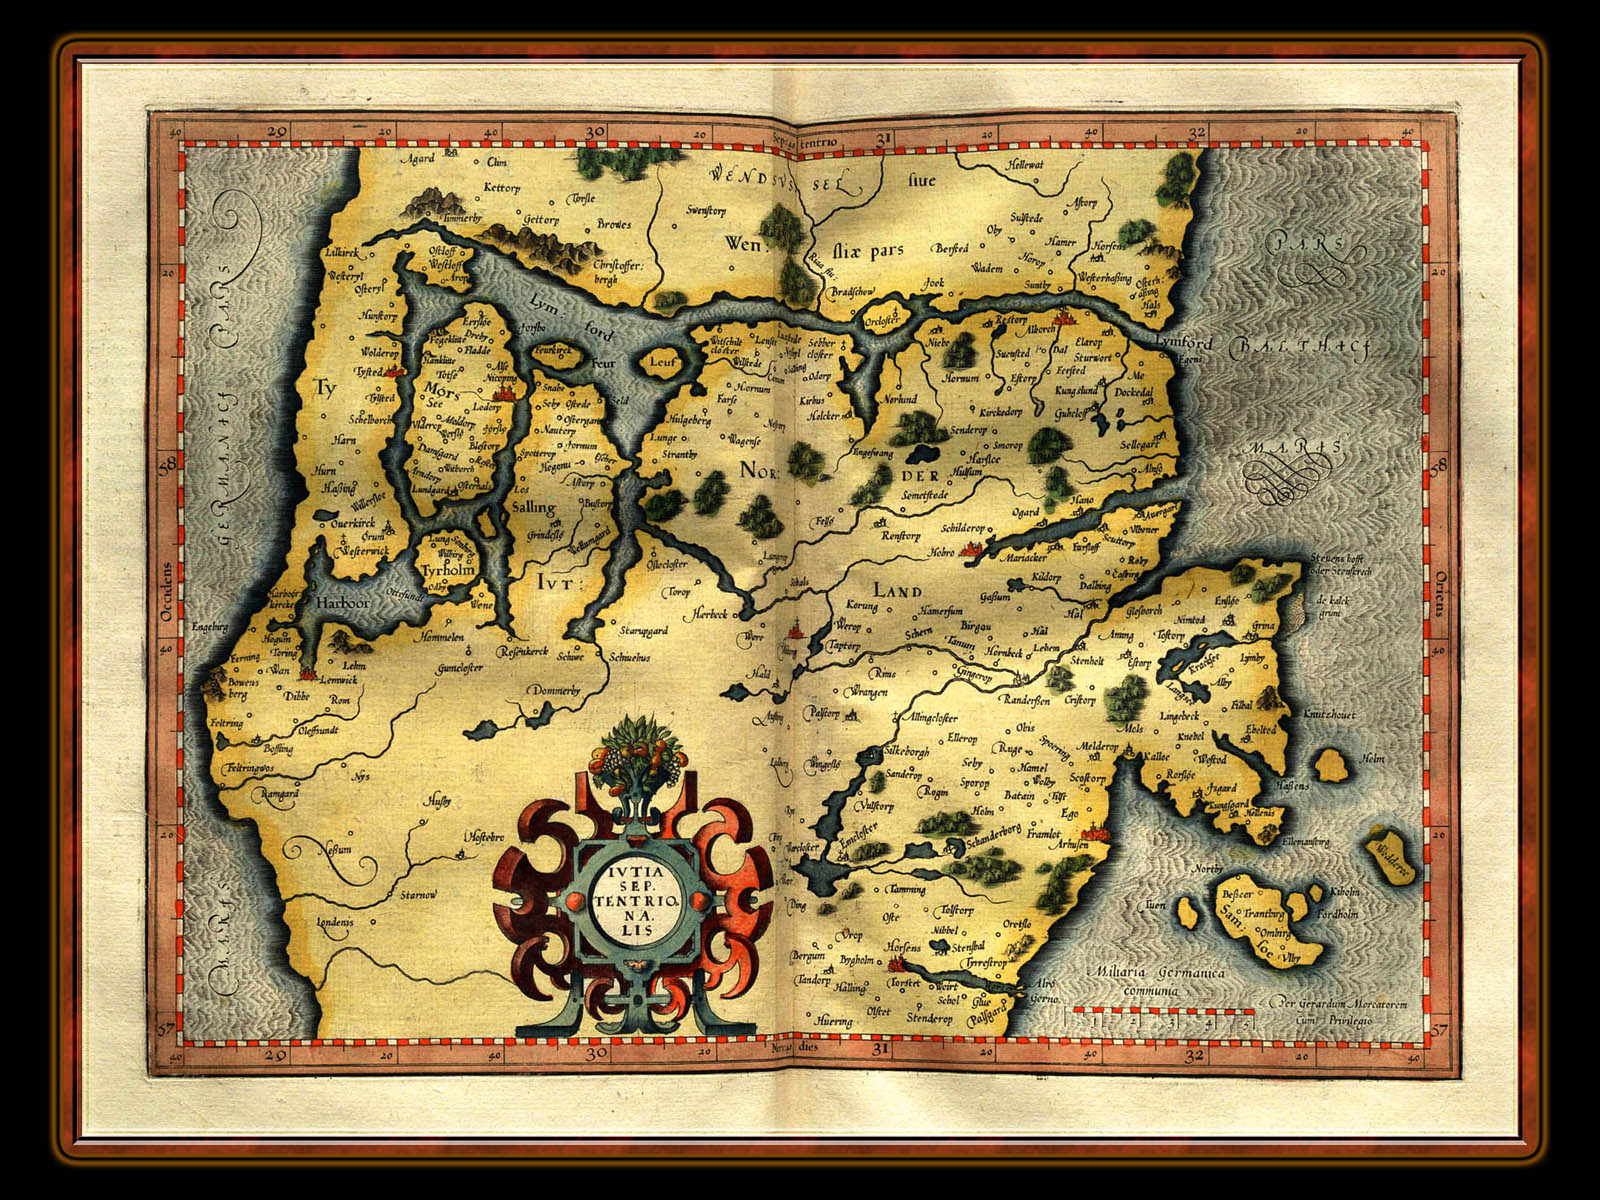 "Gerhard Mercator 1595 World Atlas - Cosmographicae" - Wallpaper No. 81 of 106. Right click for saving options.